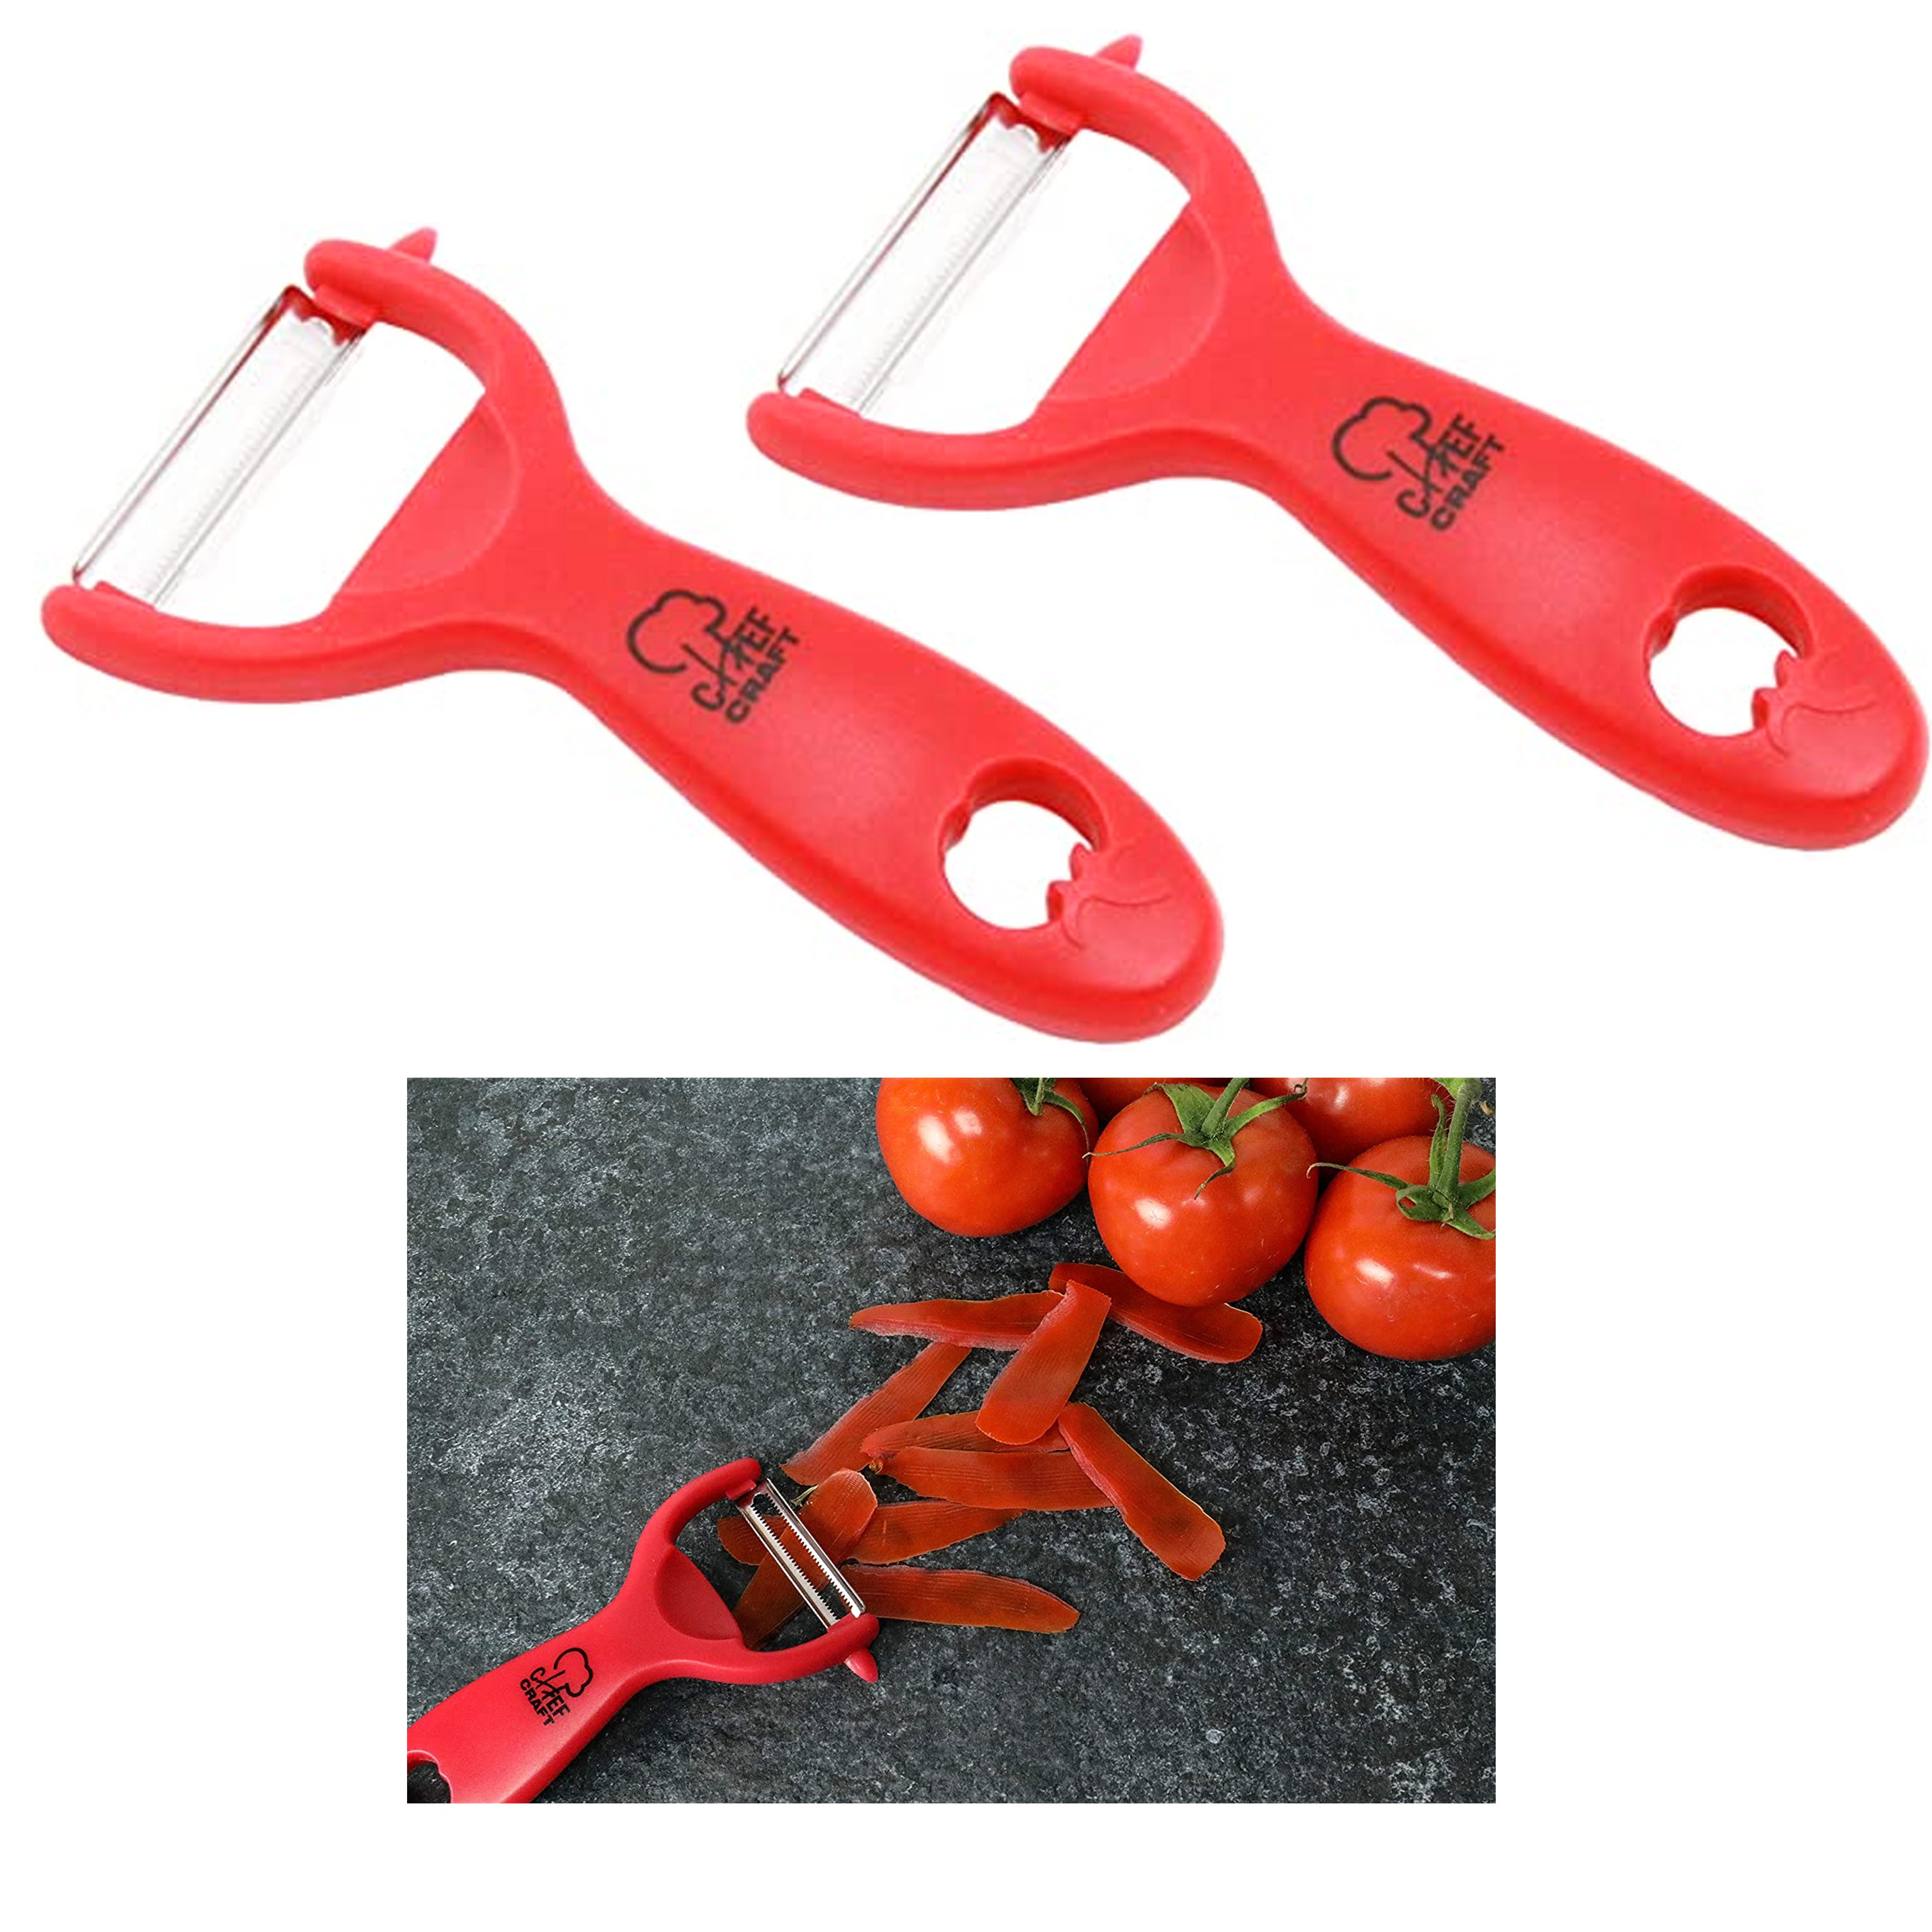 Rosle Stainless Steel Tomato/Kiwi Peeler and Tomato Slicer Set